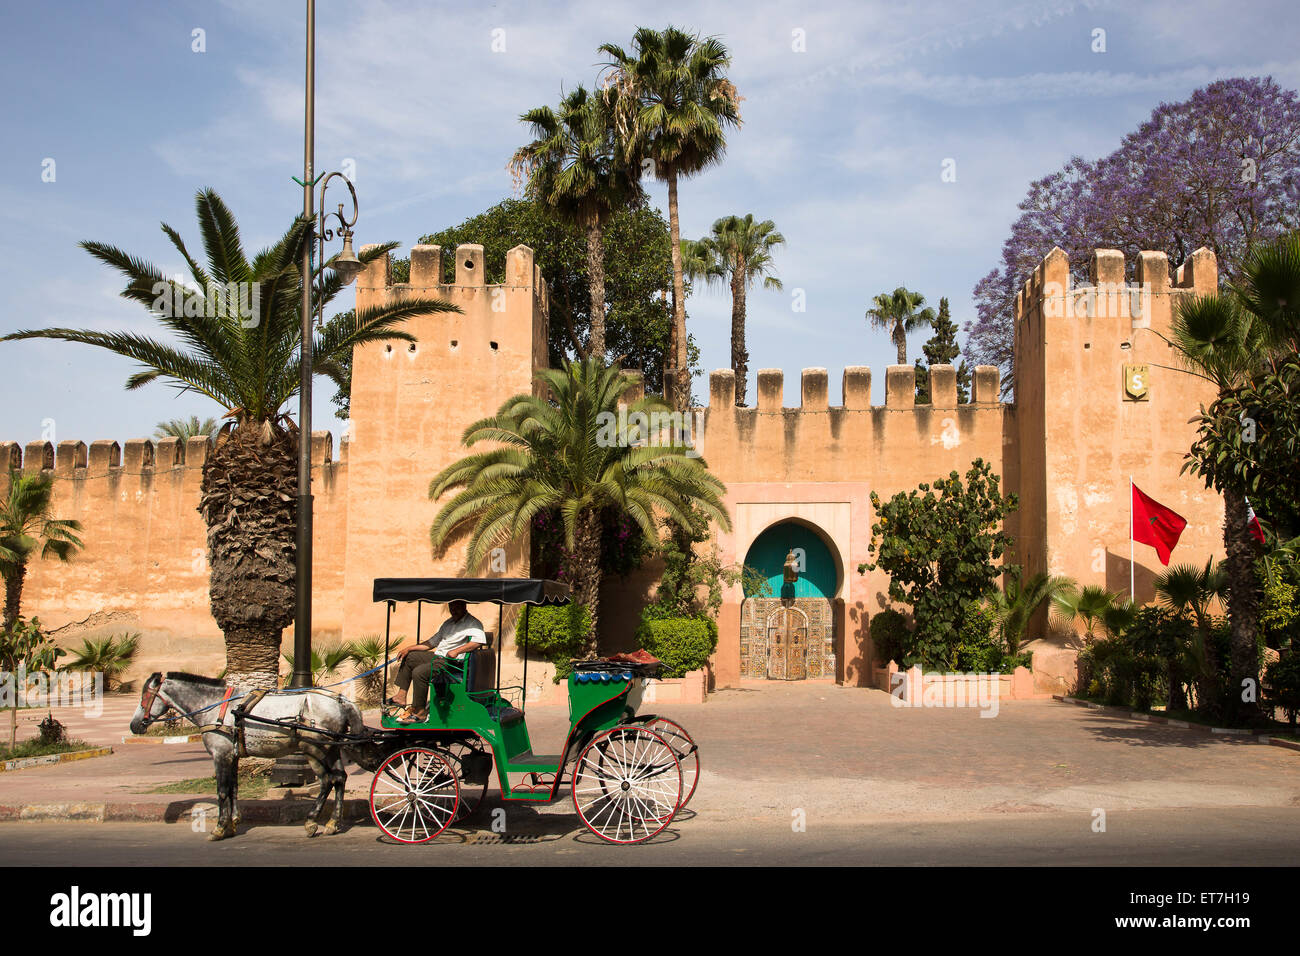 Morocco, Taroudant, City wall and gate Stock Photo